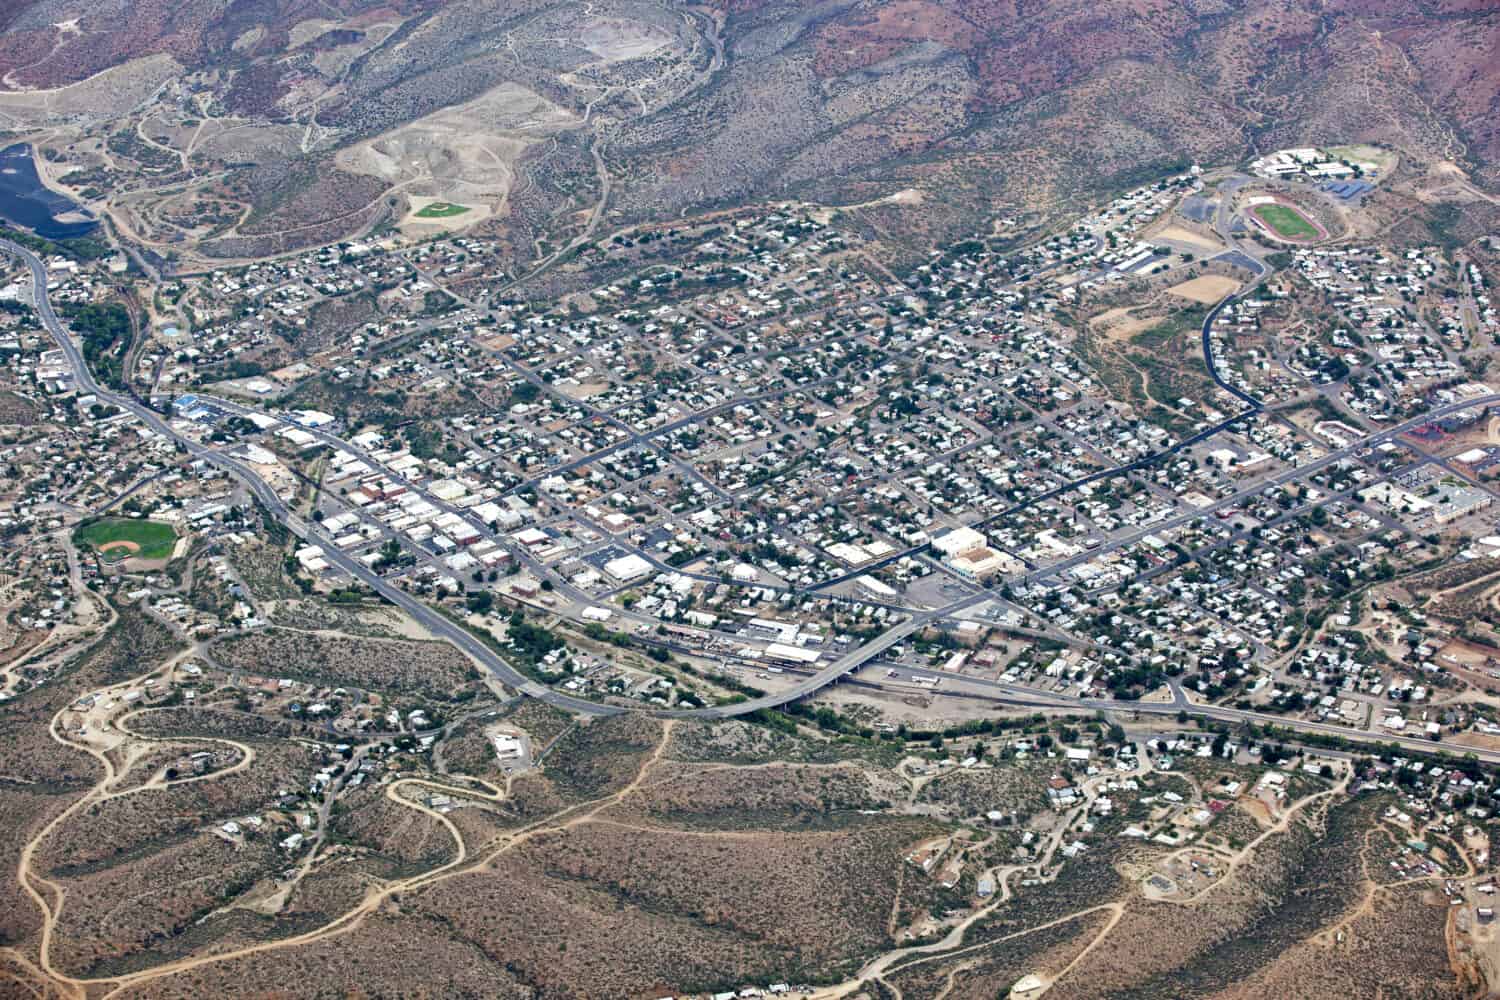 Globe, Arizona as viewed from high above